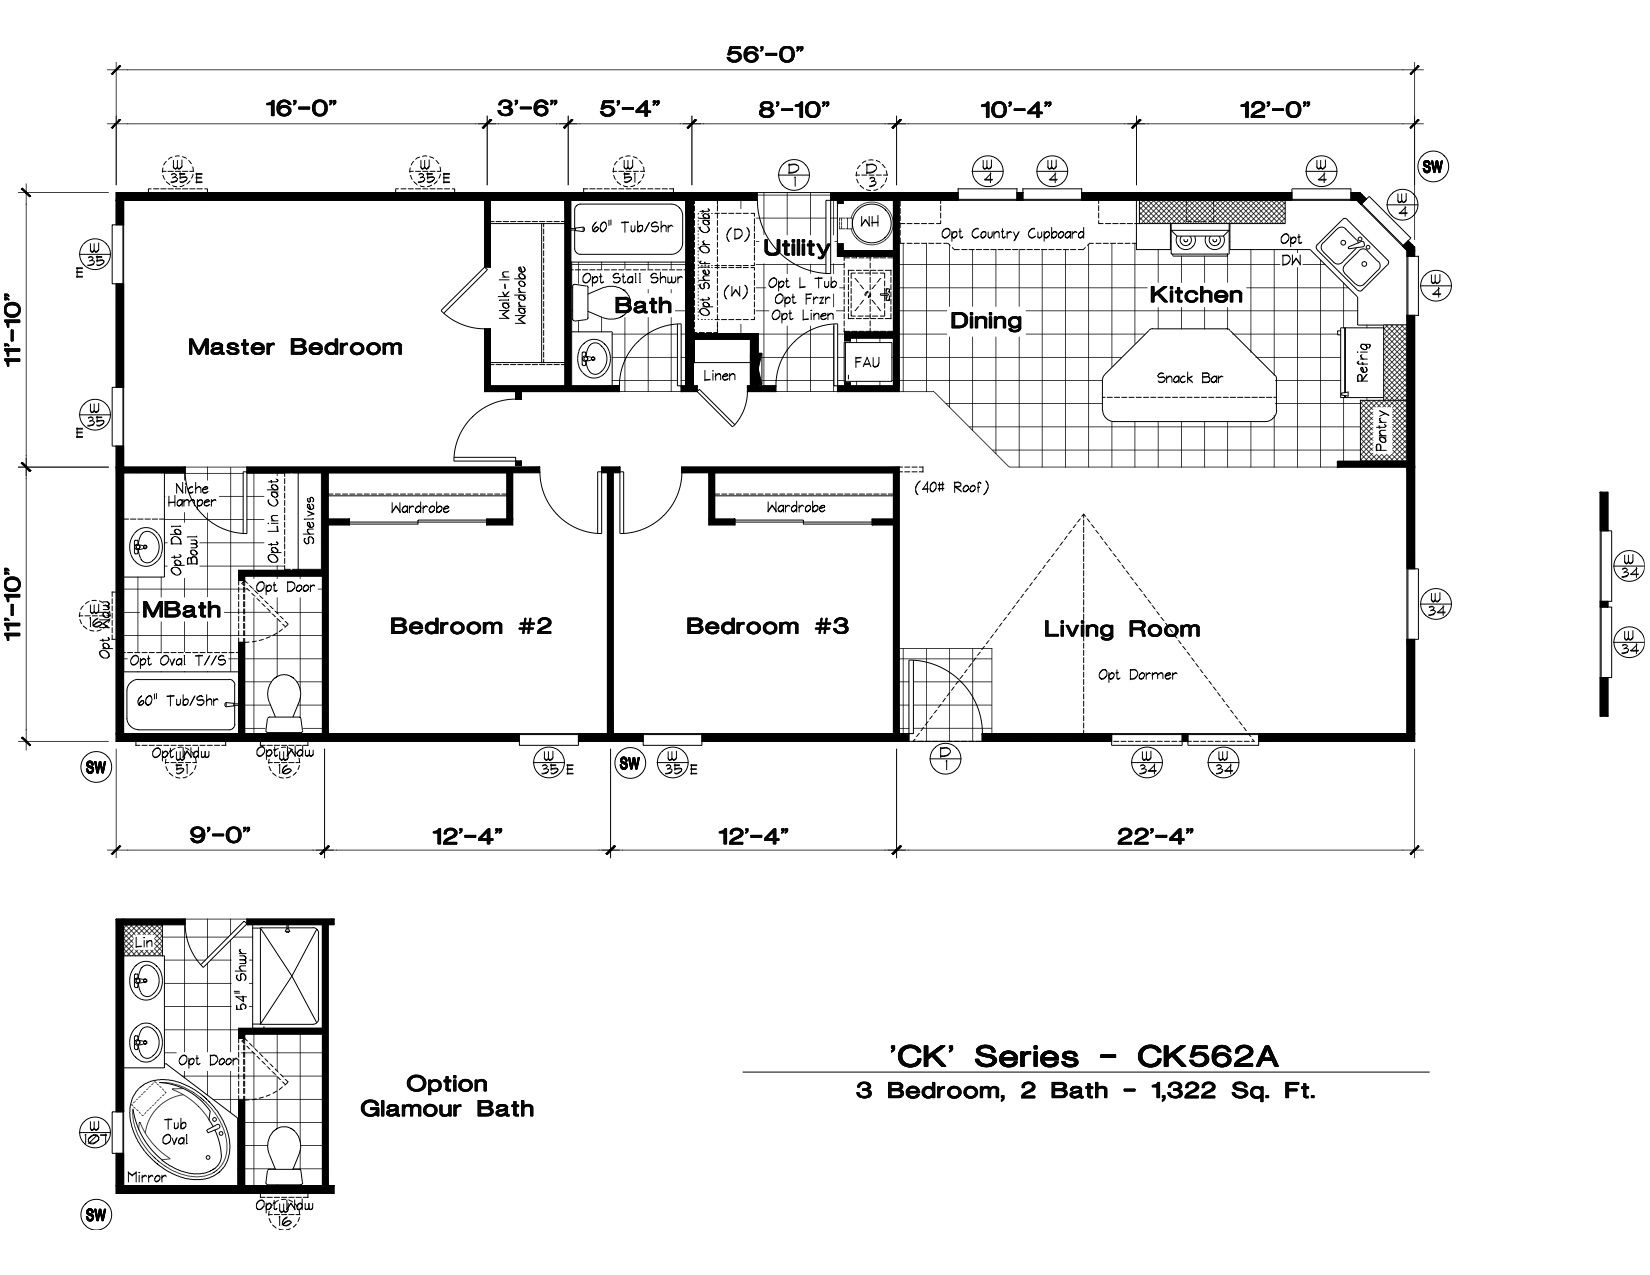 Homes Direct Modular Homes - Model CK562A - Floorplan